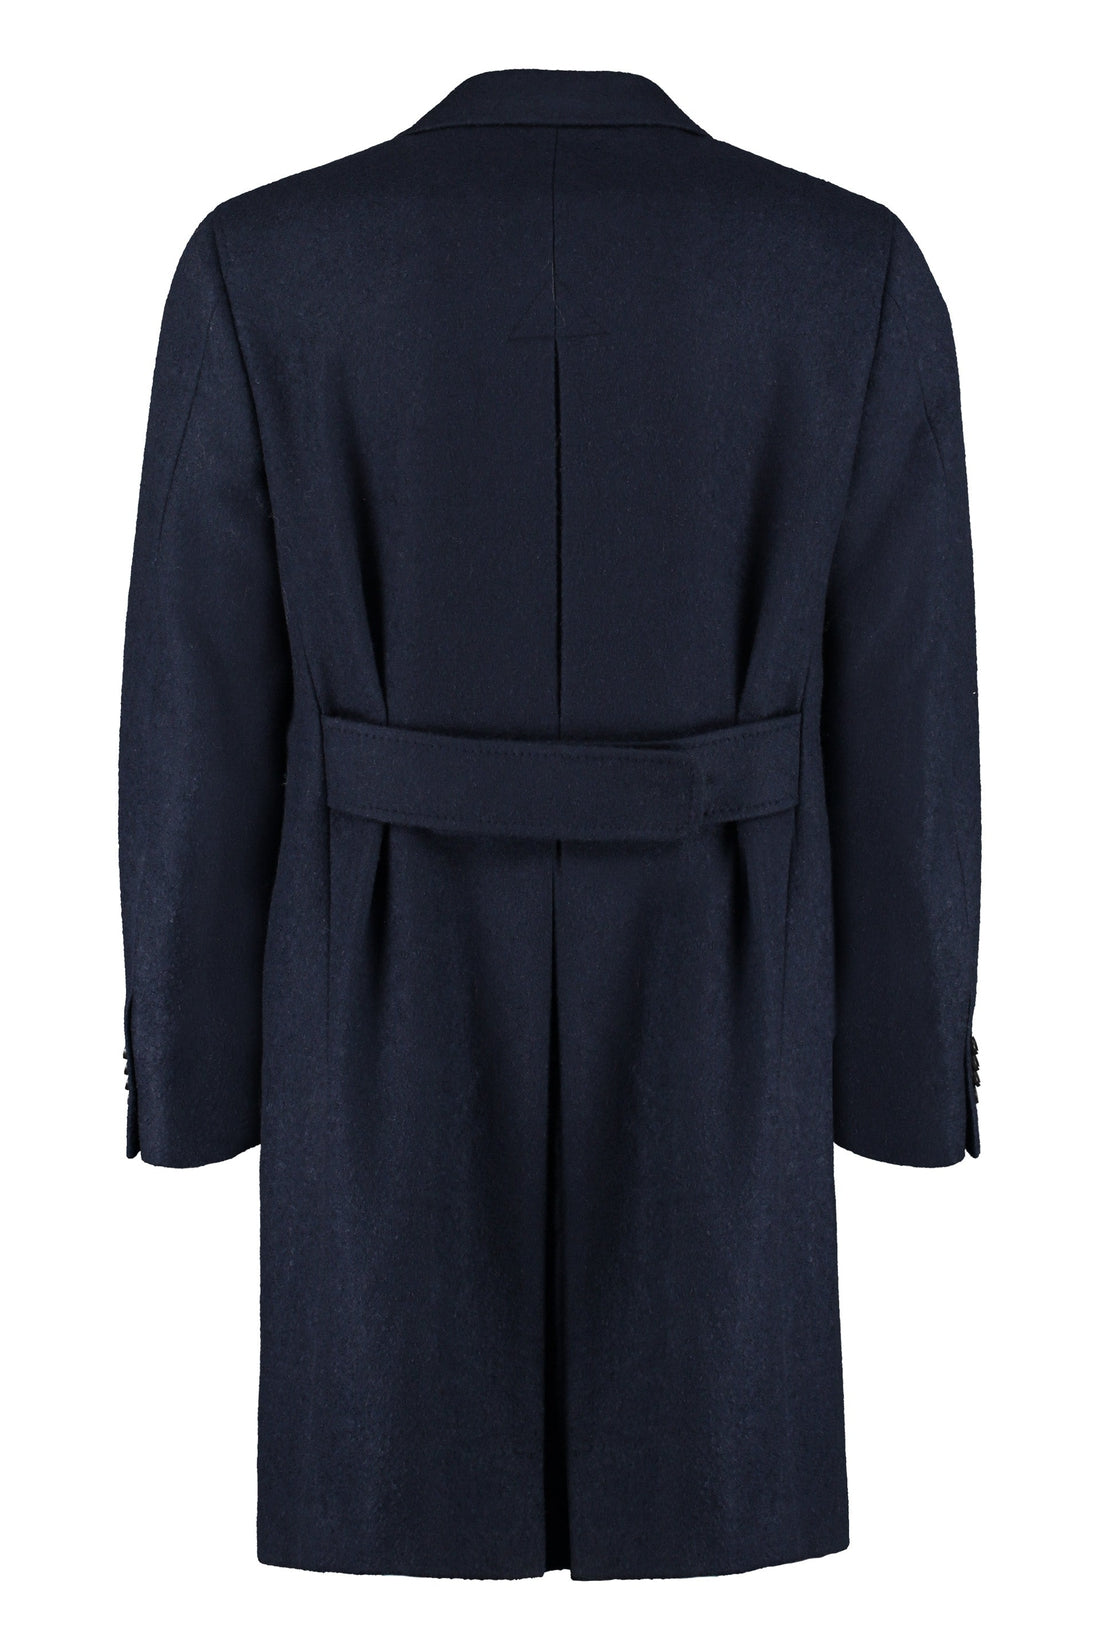 Canali-OUTLET-SALE-Wool coat-ARCHIVIST